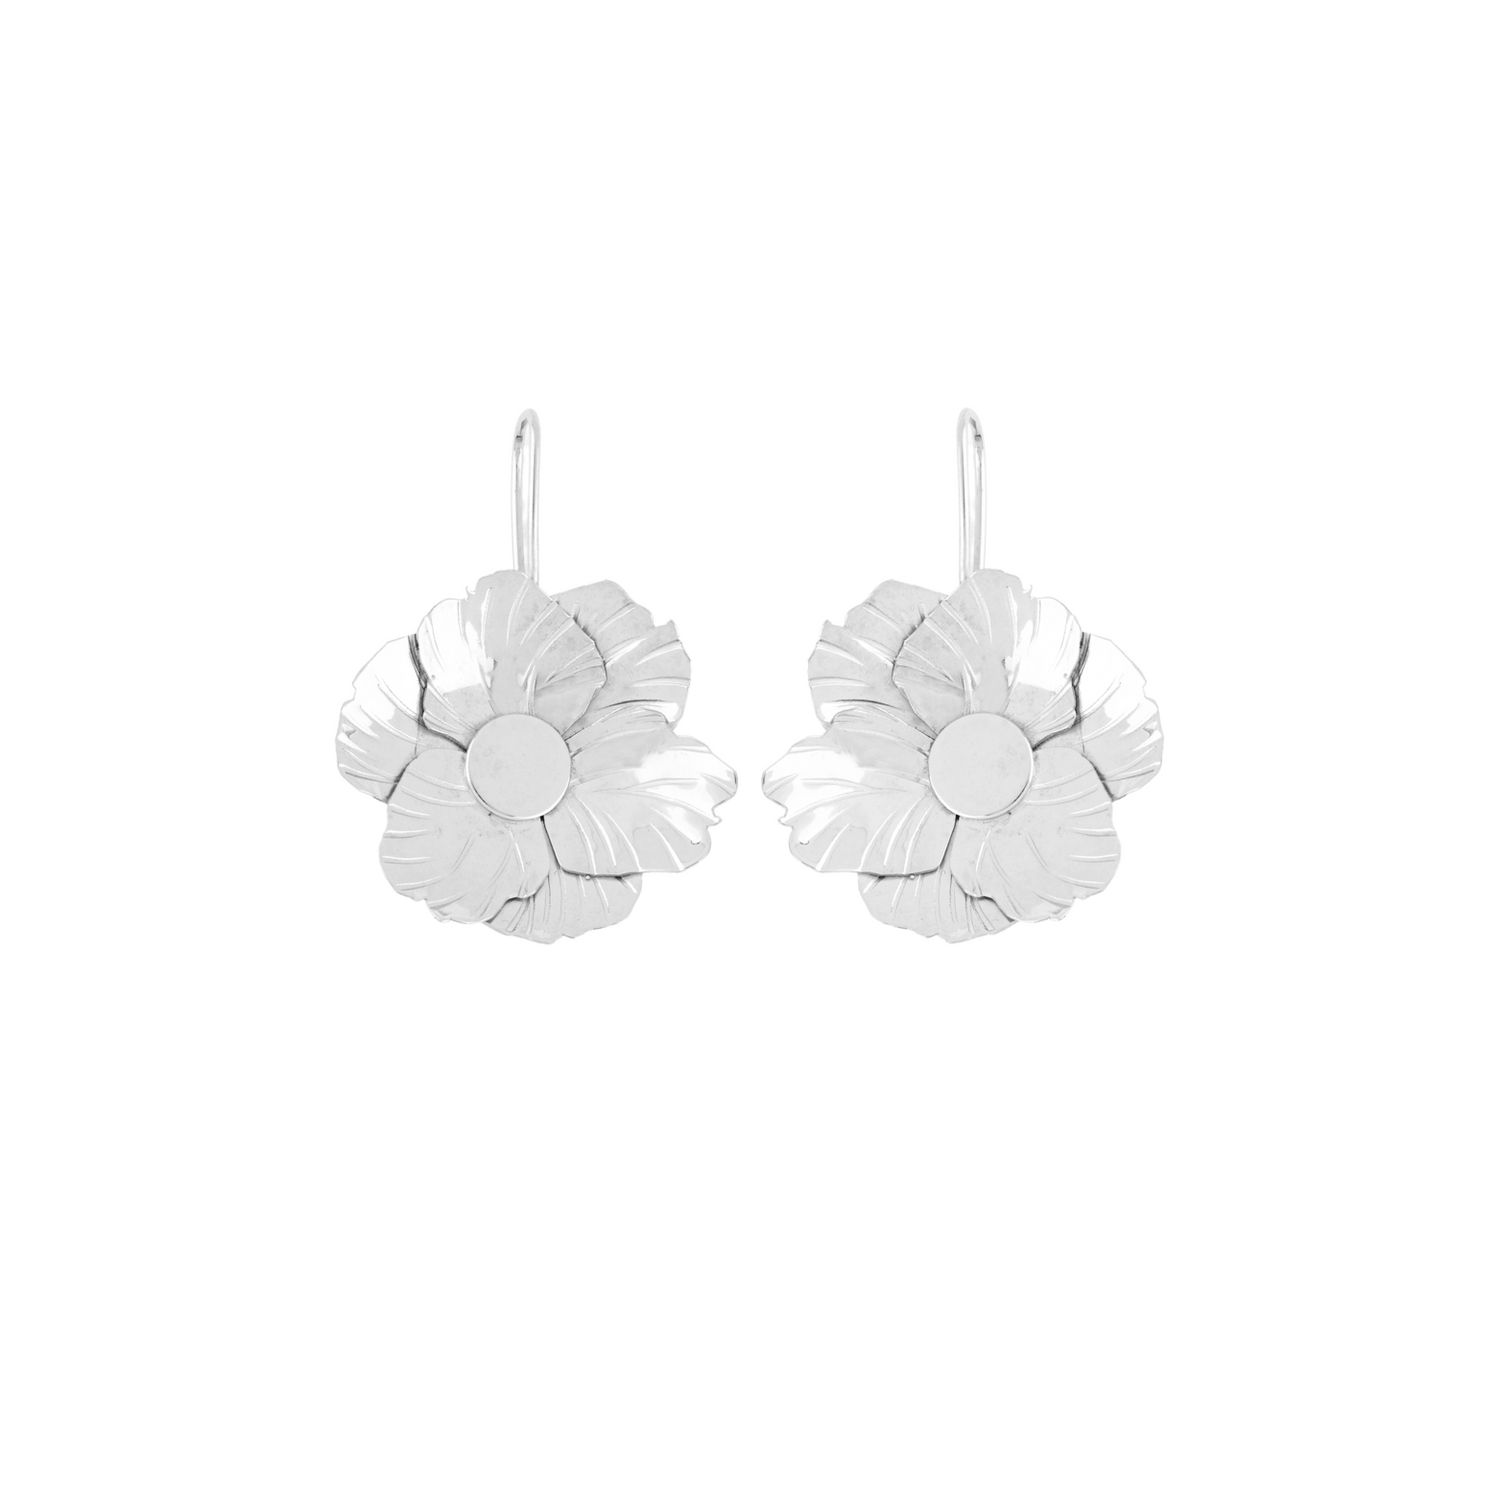 Anemone earrings